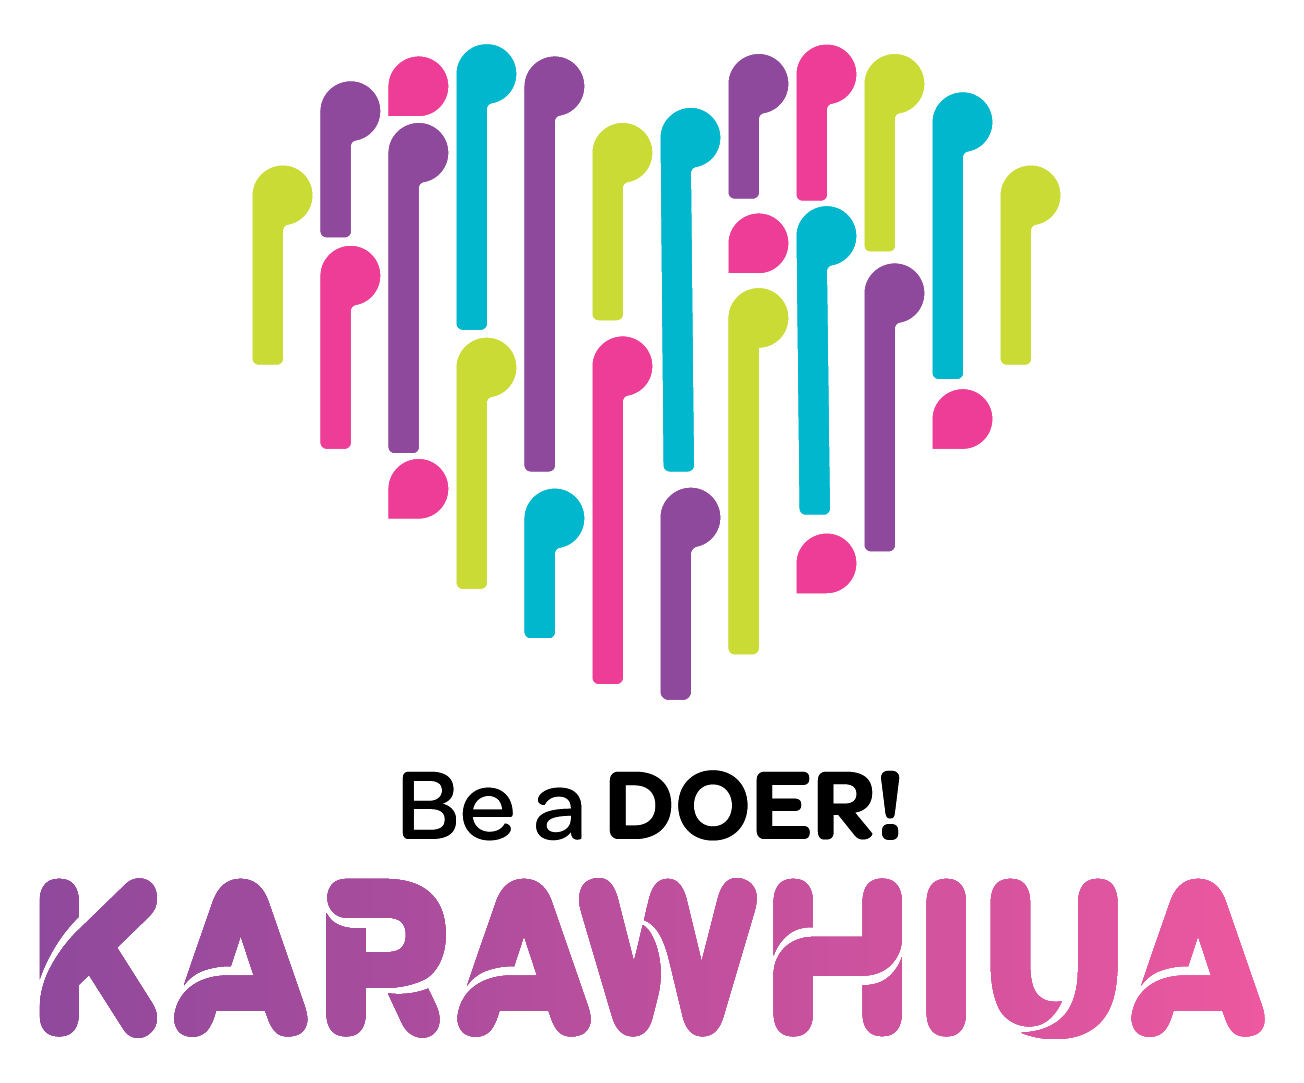 Be a DOER! KARAWHIUA